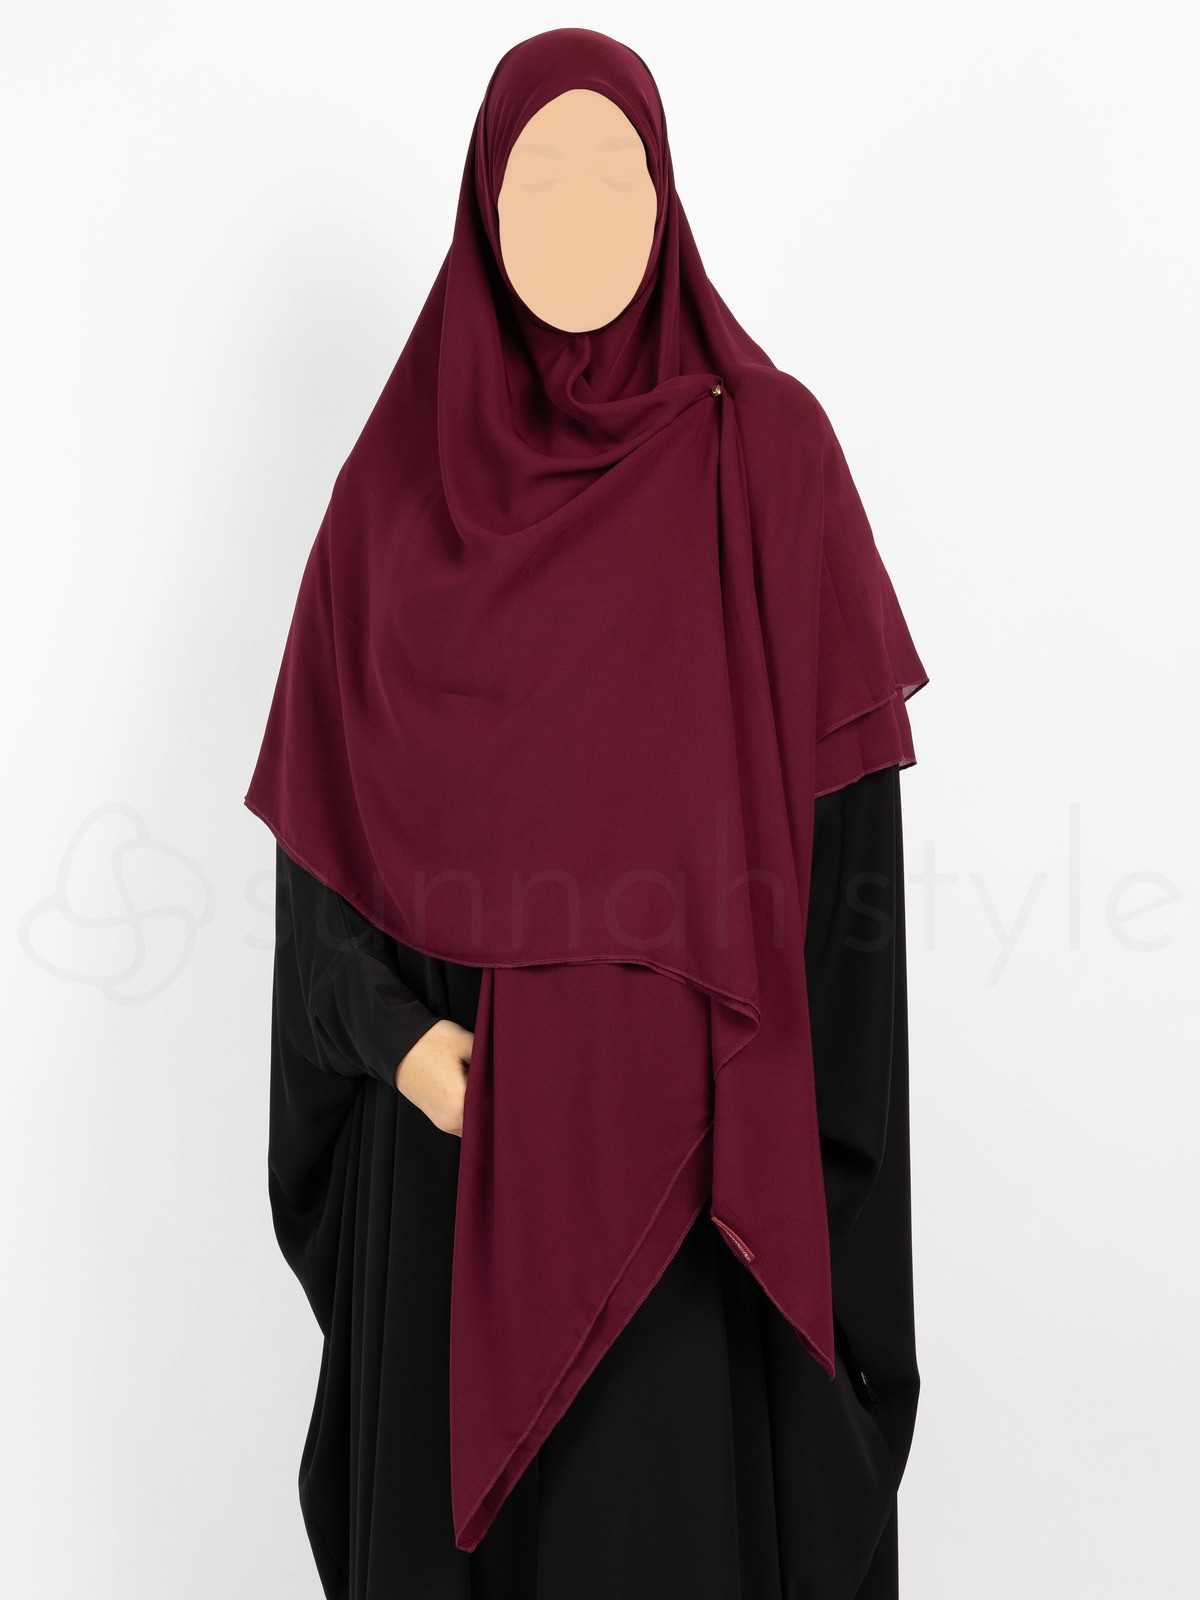 Sunnah Style - Essentials Square Hijab (Premium Chiffon) - XL (Burgundy)